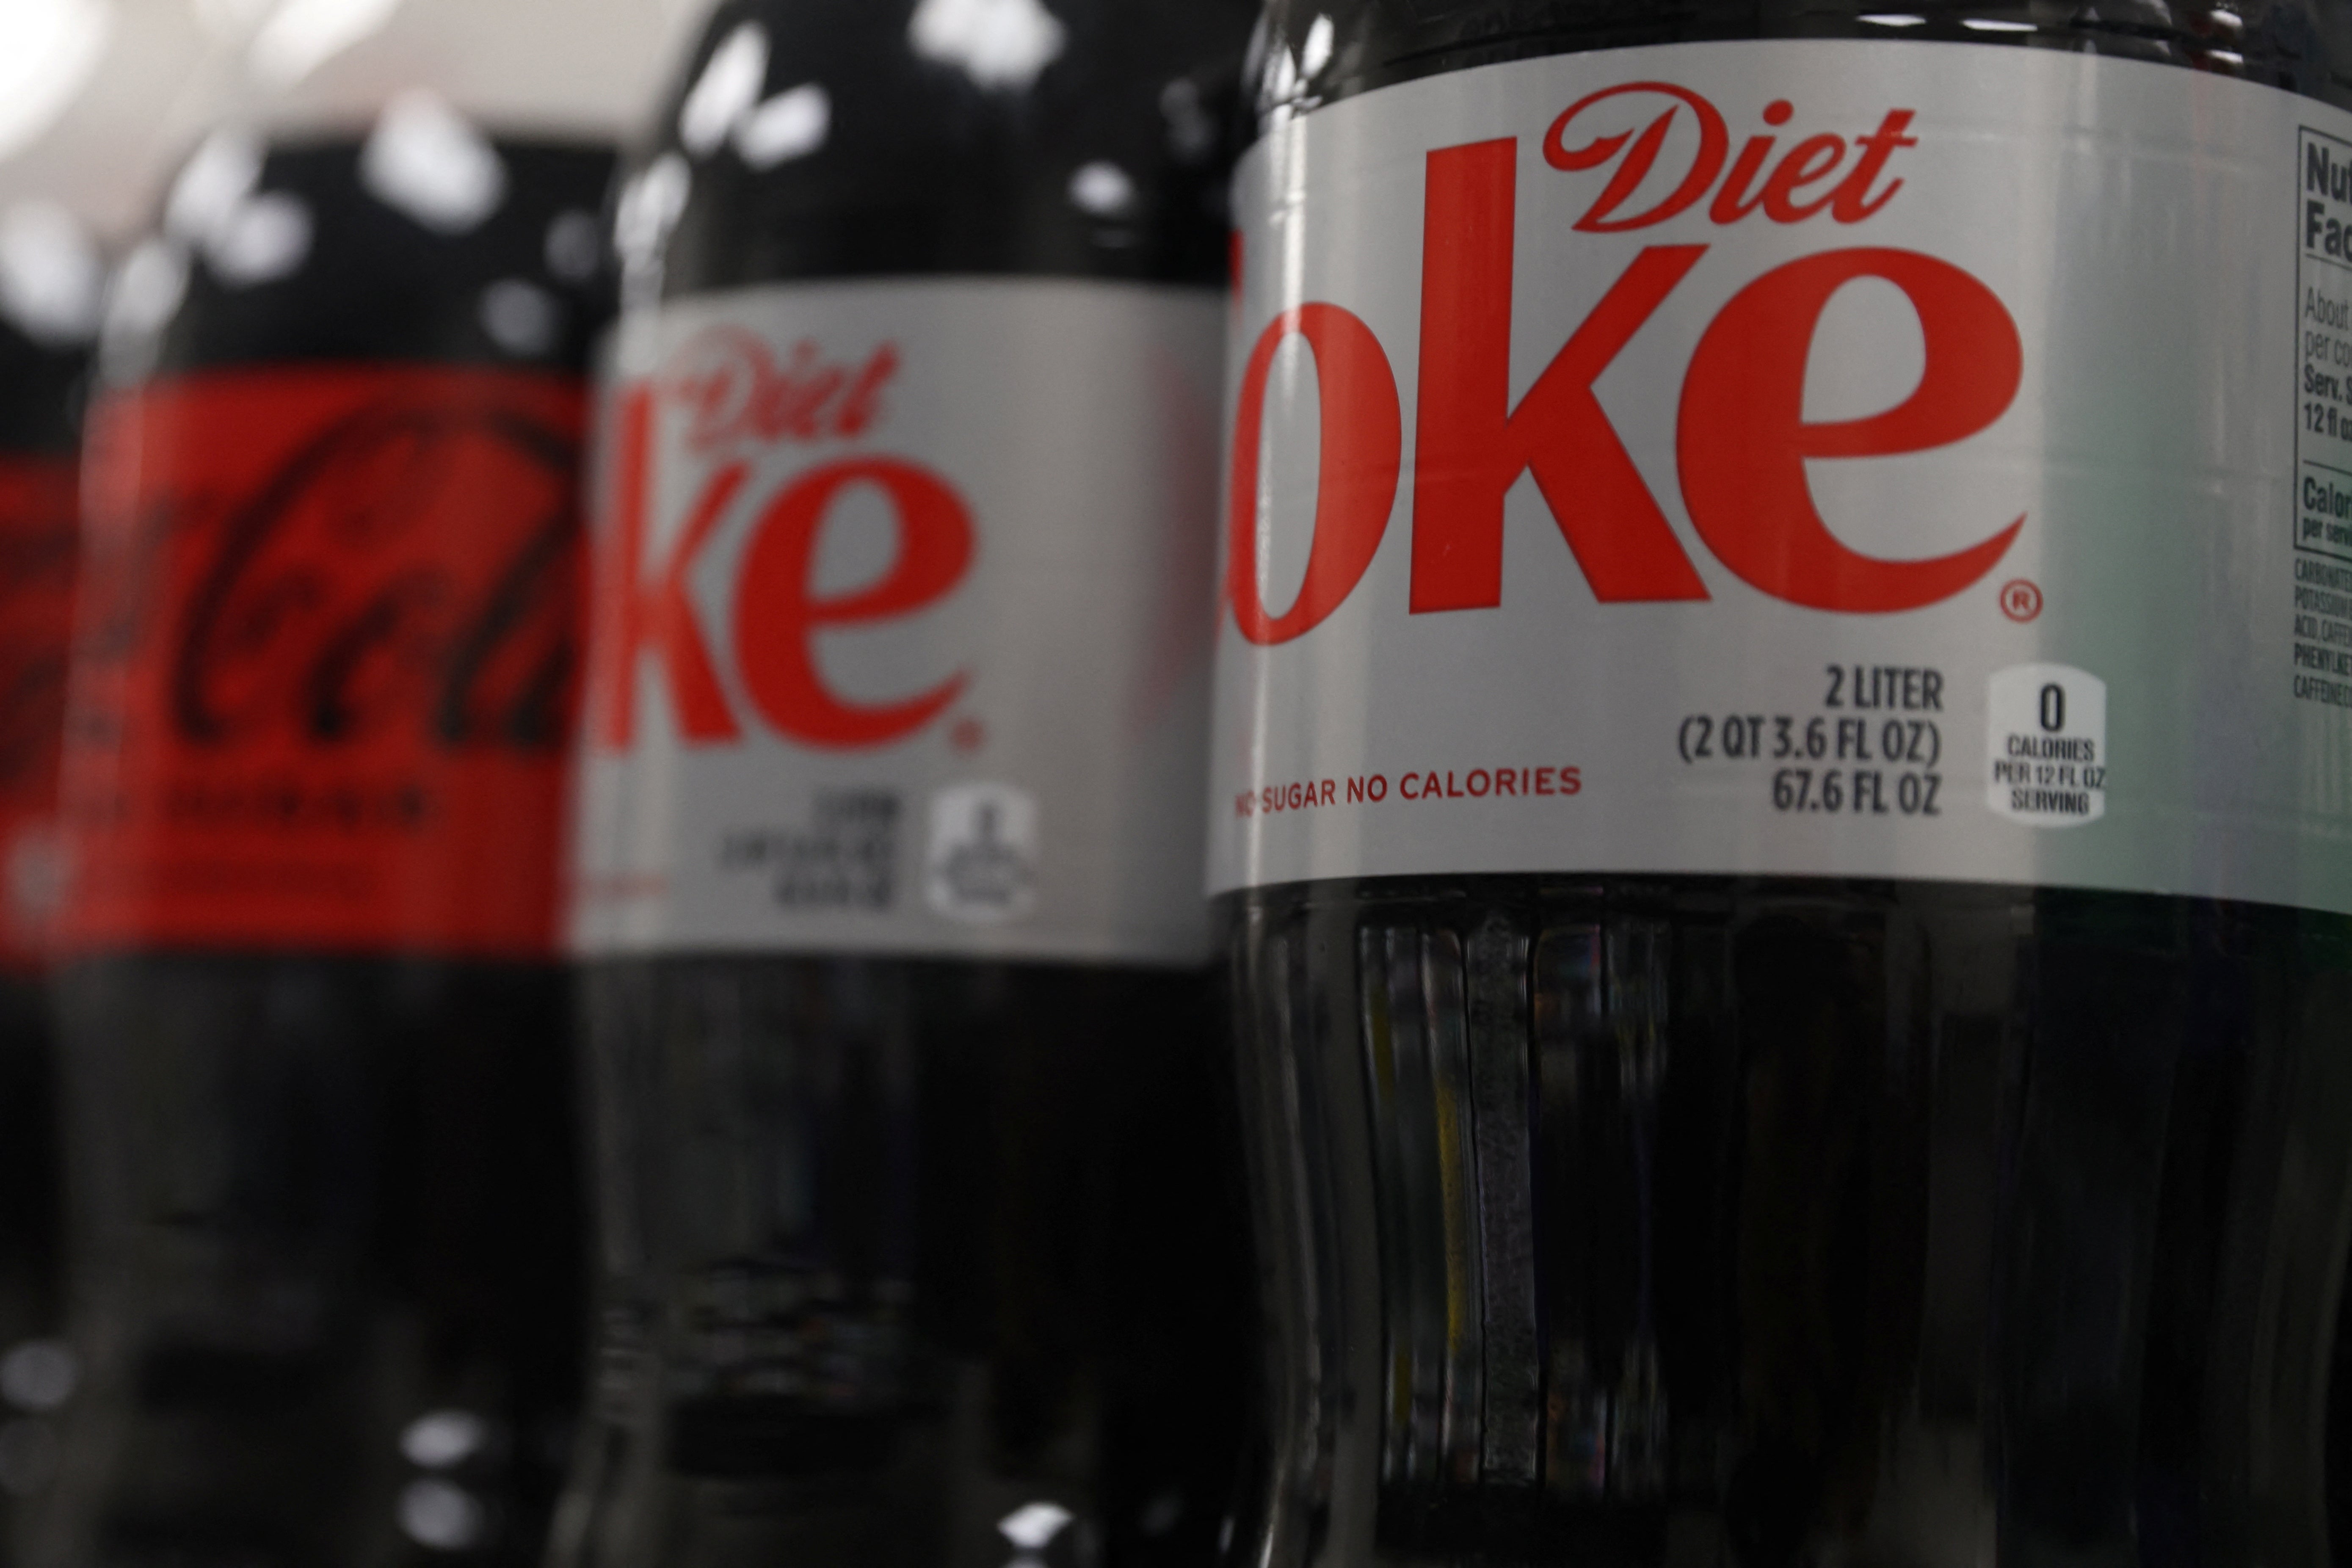 Popular diet alternatives Diet Coke and Coke Zero both contain aspartame